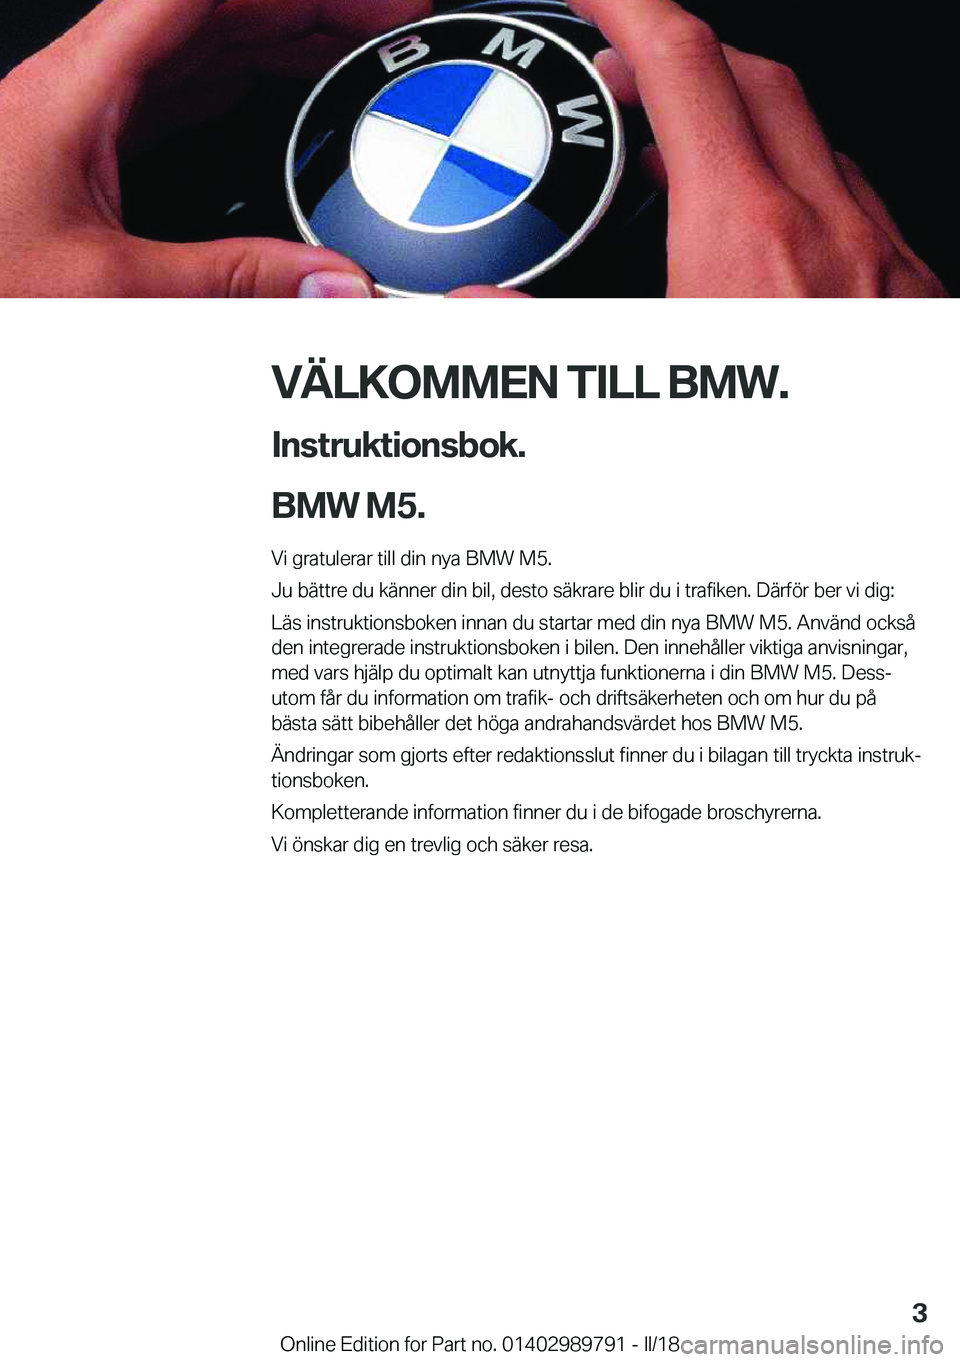 BMW M5 2018  InstruktionsbÖcker (in Swedish) �V�Ä�L�K�O�M�M�E�N��T�I�L�L��B�M�W�.�I�n�s�t�r�u�k�t�i�o�n�s�b�o�k�.
�B�M�W��M�5�.
�V�i� �g�r�a�t�u�l�e�r�a�r� �t�i�l�l� �d�i�n� �n�y�a� �B�M�W� �M�5�.
�J�u� �b�ä�t�t�r�e� �d�u� �k�ä�n�n�e�r� �d